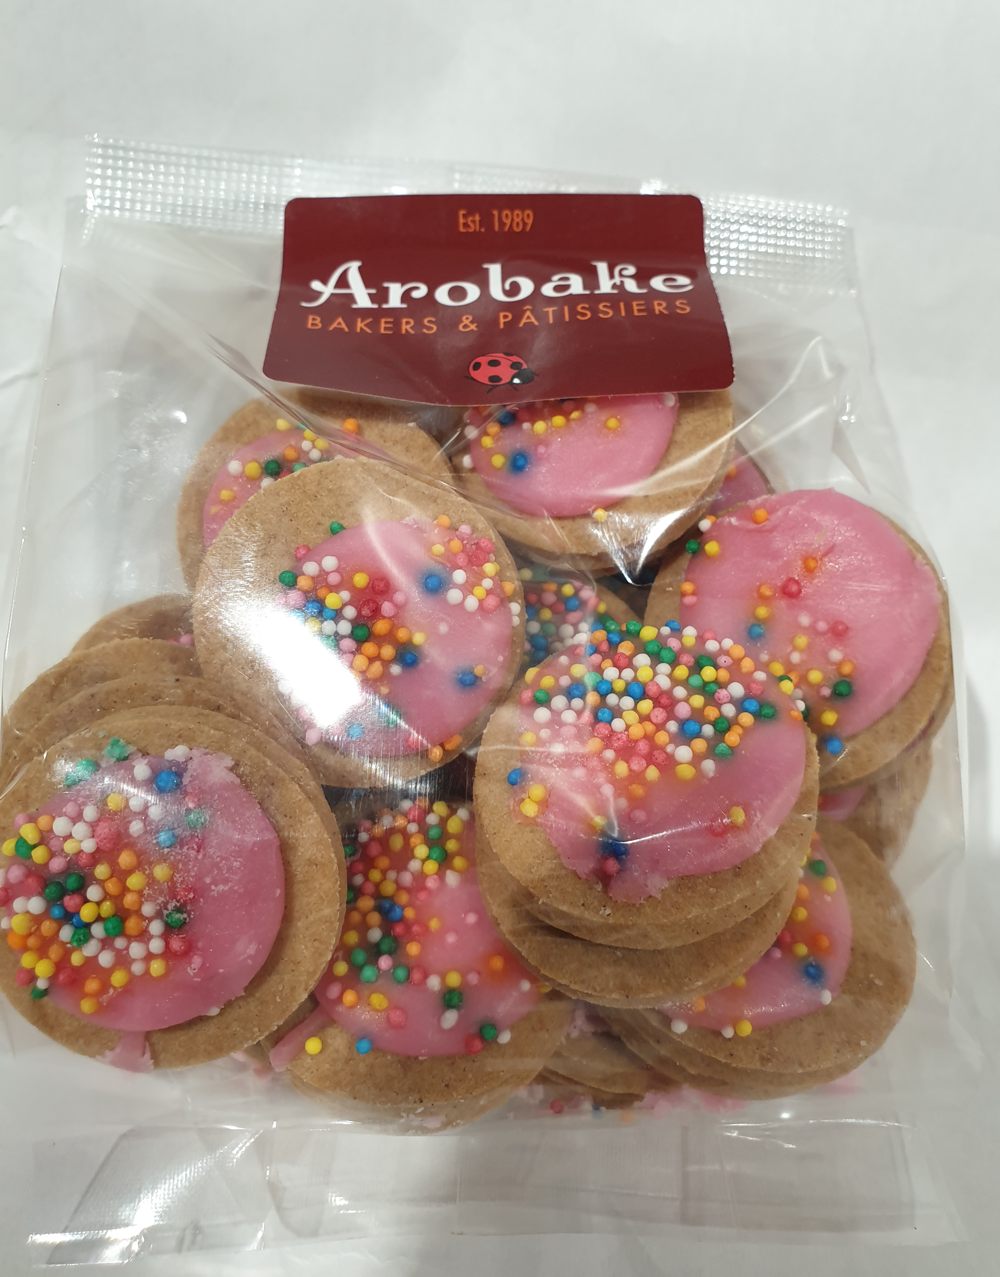 A box of Arobake brand Mini Belgium biscuits (200g)